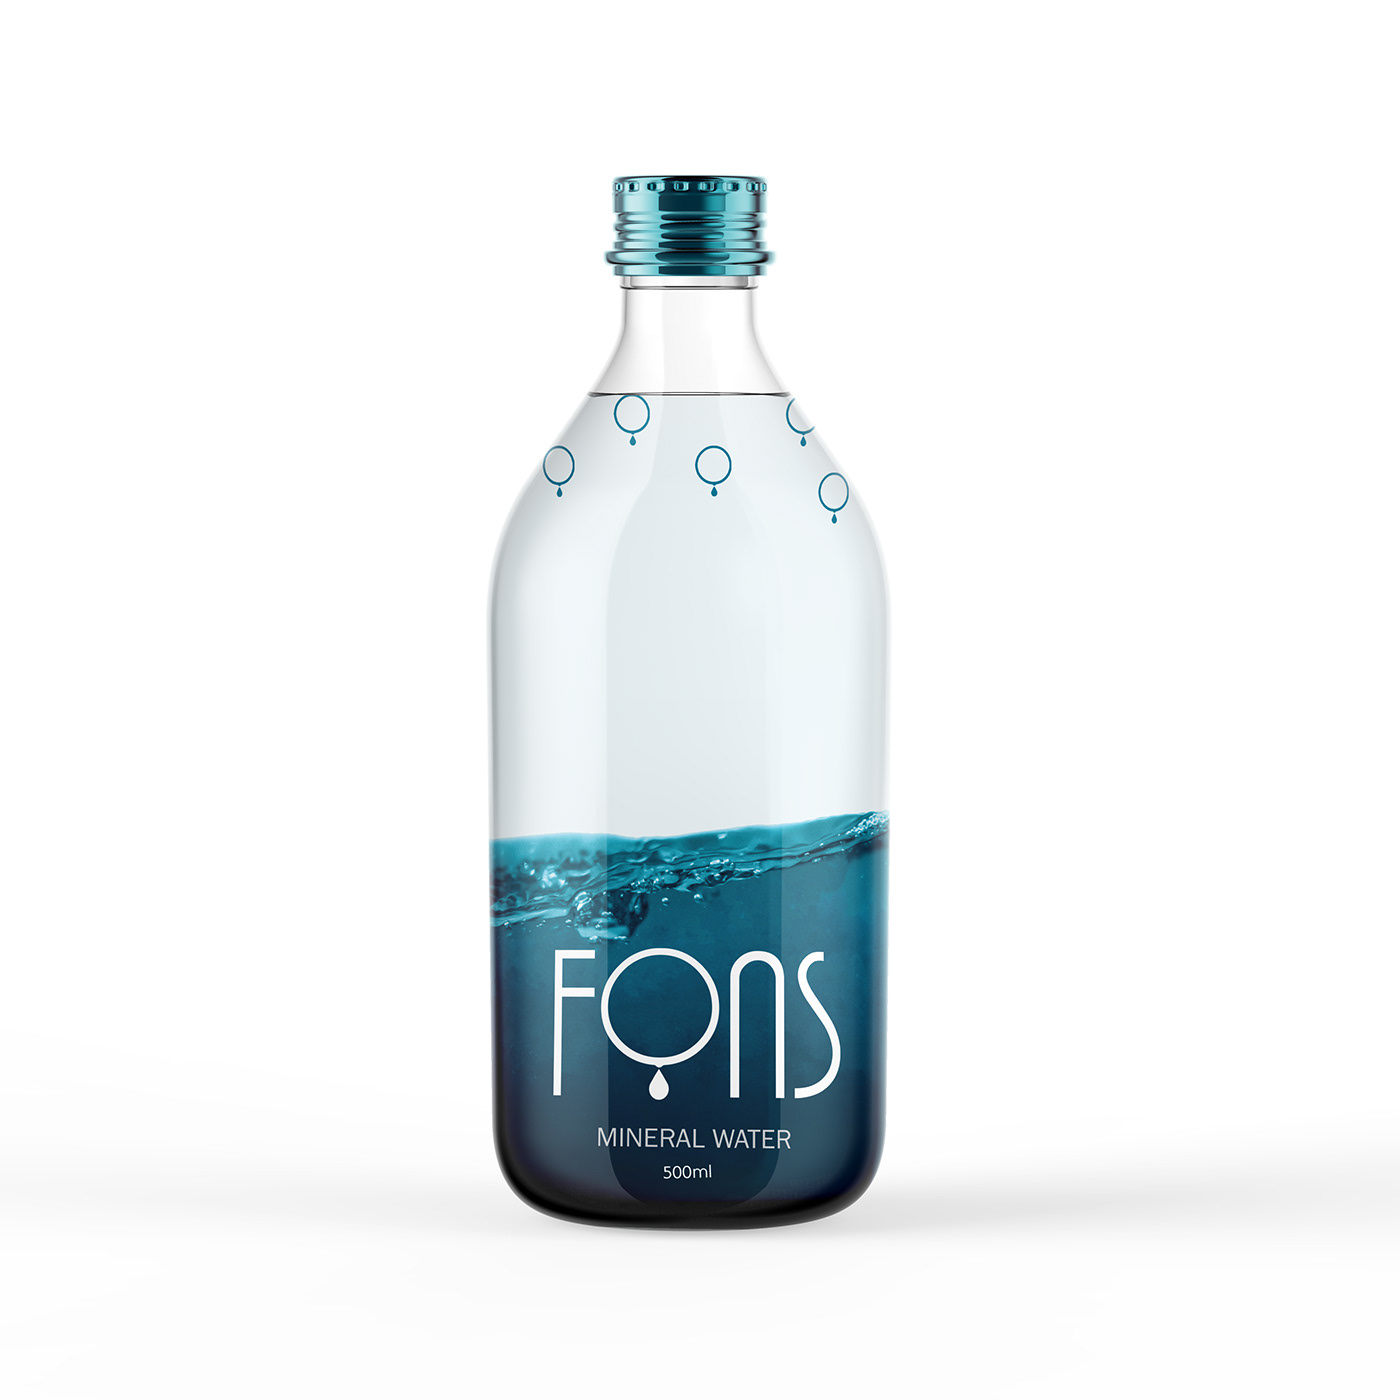 Logo Design mineral water water bottle design Label